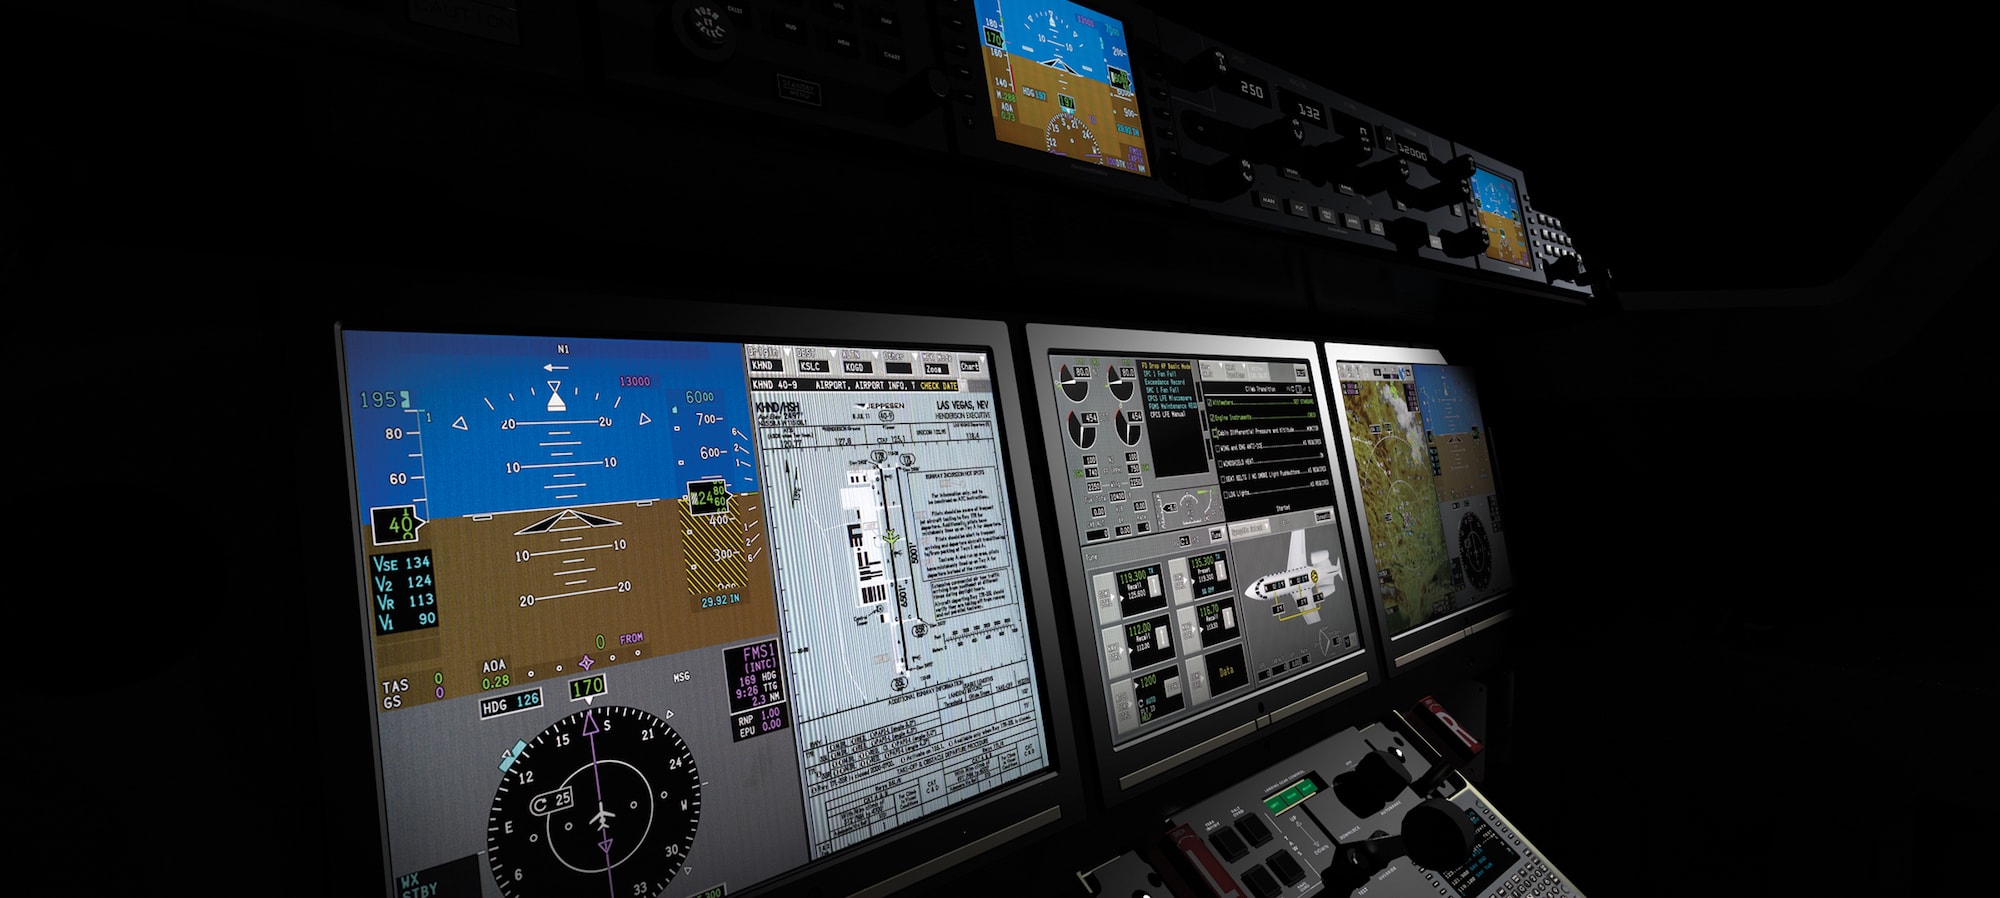 Cosgrove Avionics Services: Electronic flight instrument system (EFIS)